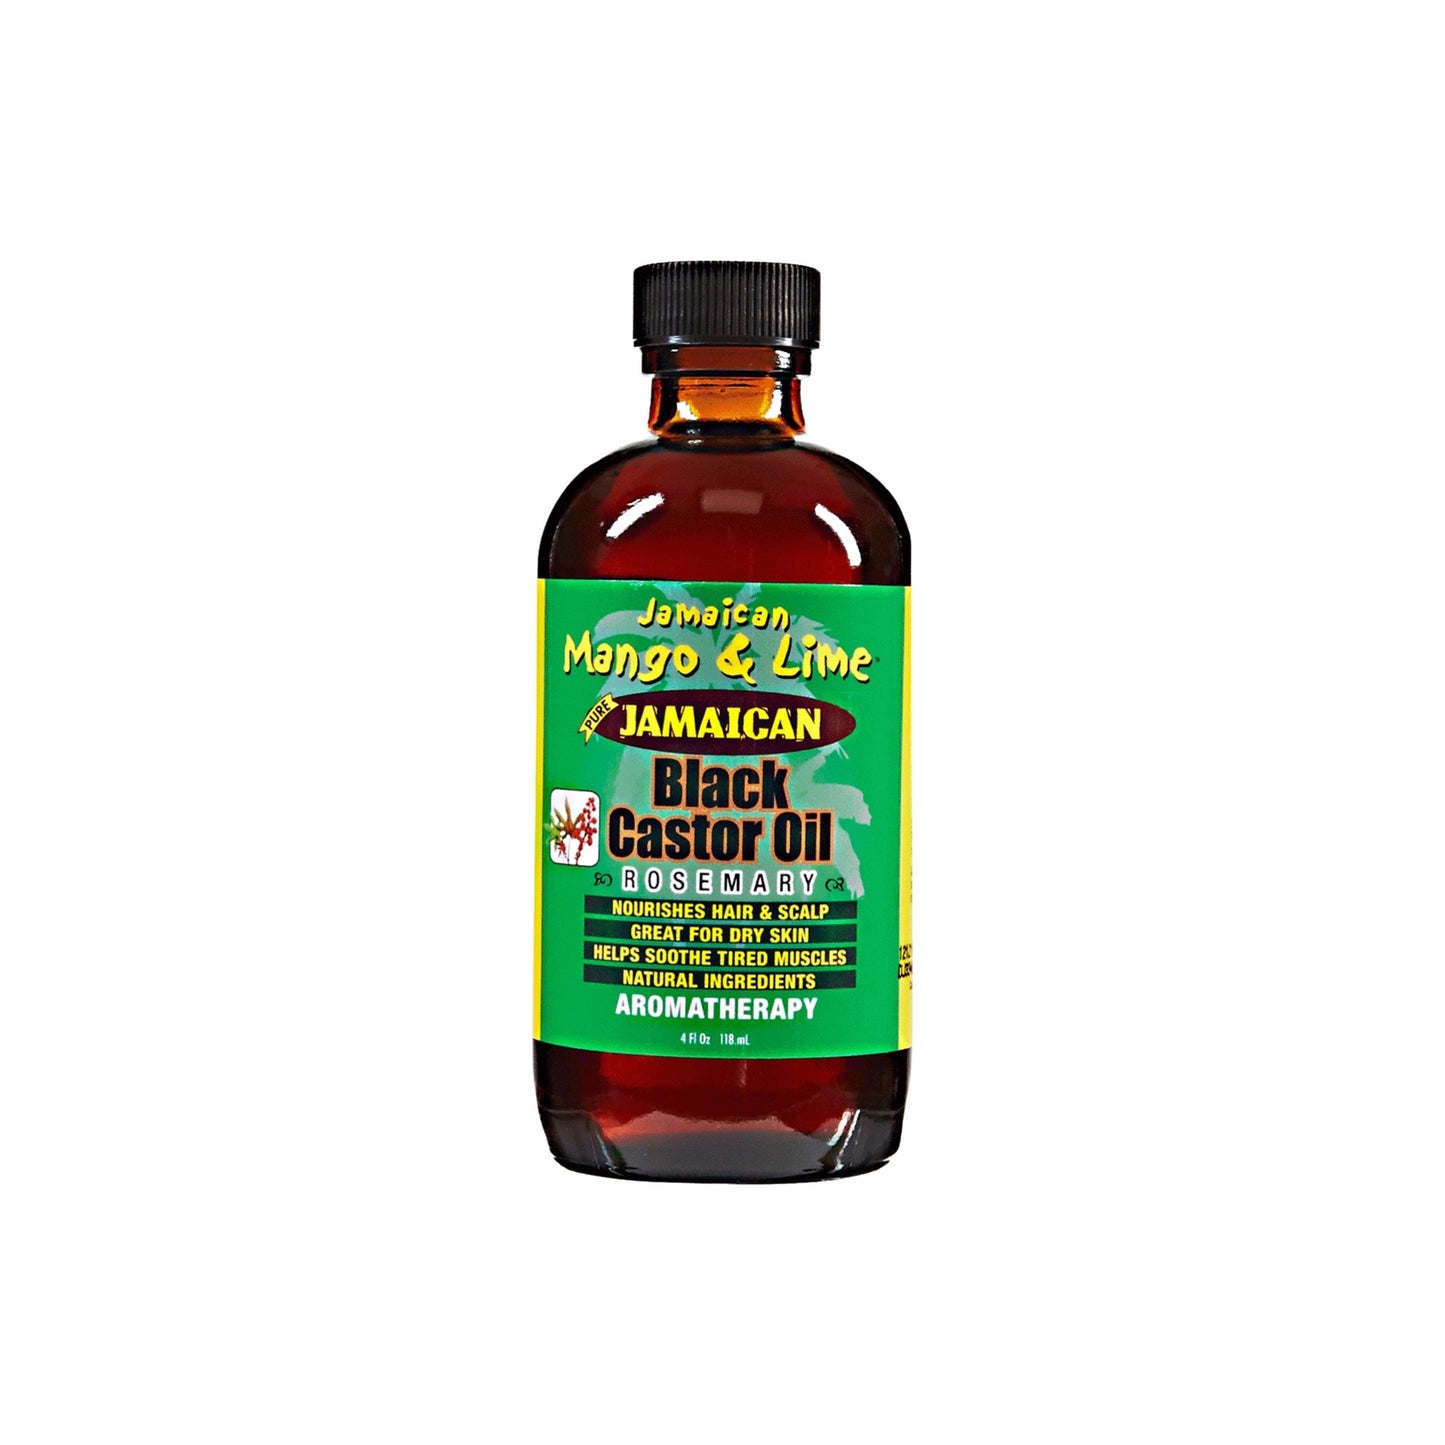 Jamaican Mango & Lime Black Castor Oil, Rosemary - 4 Oz